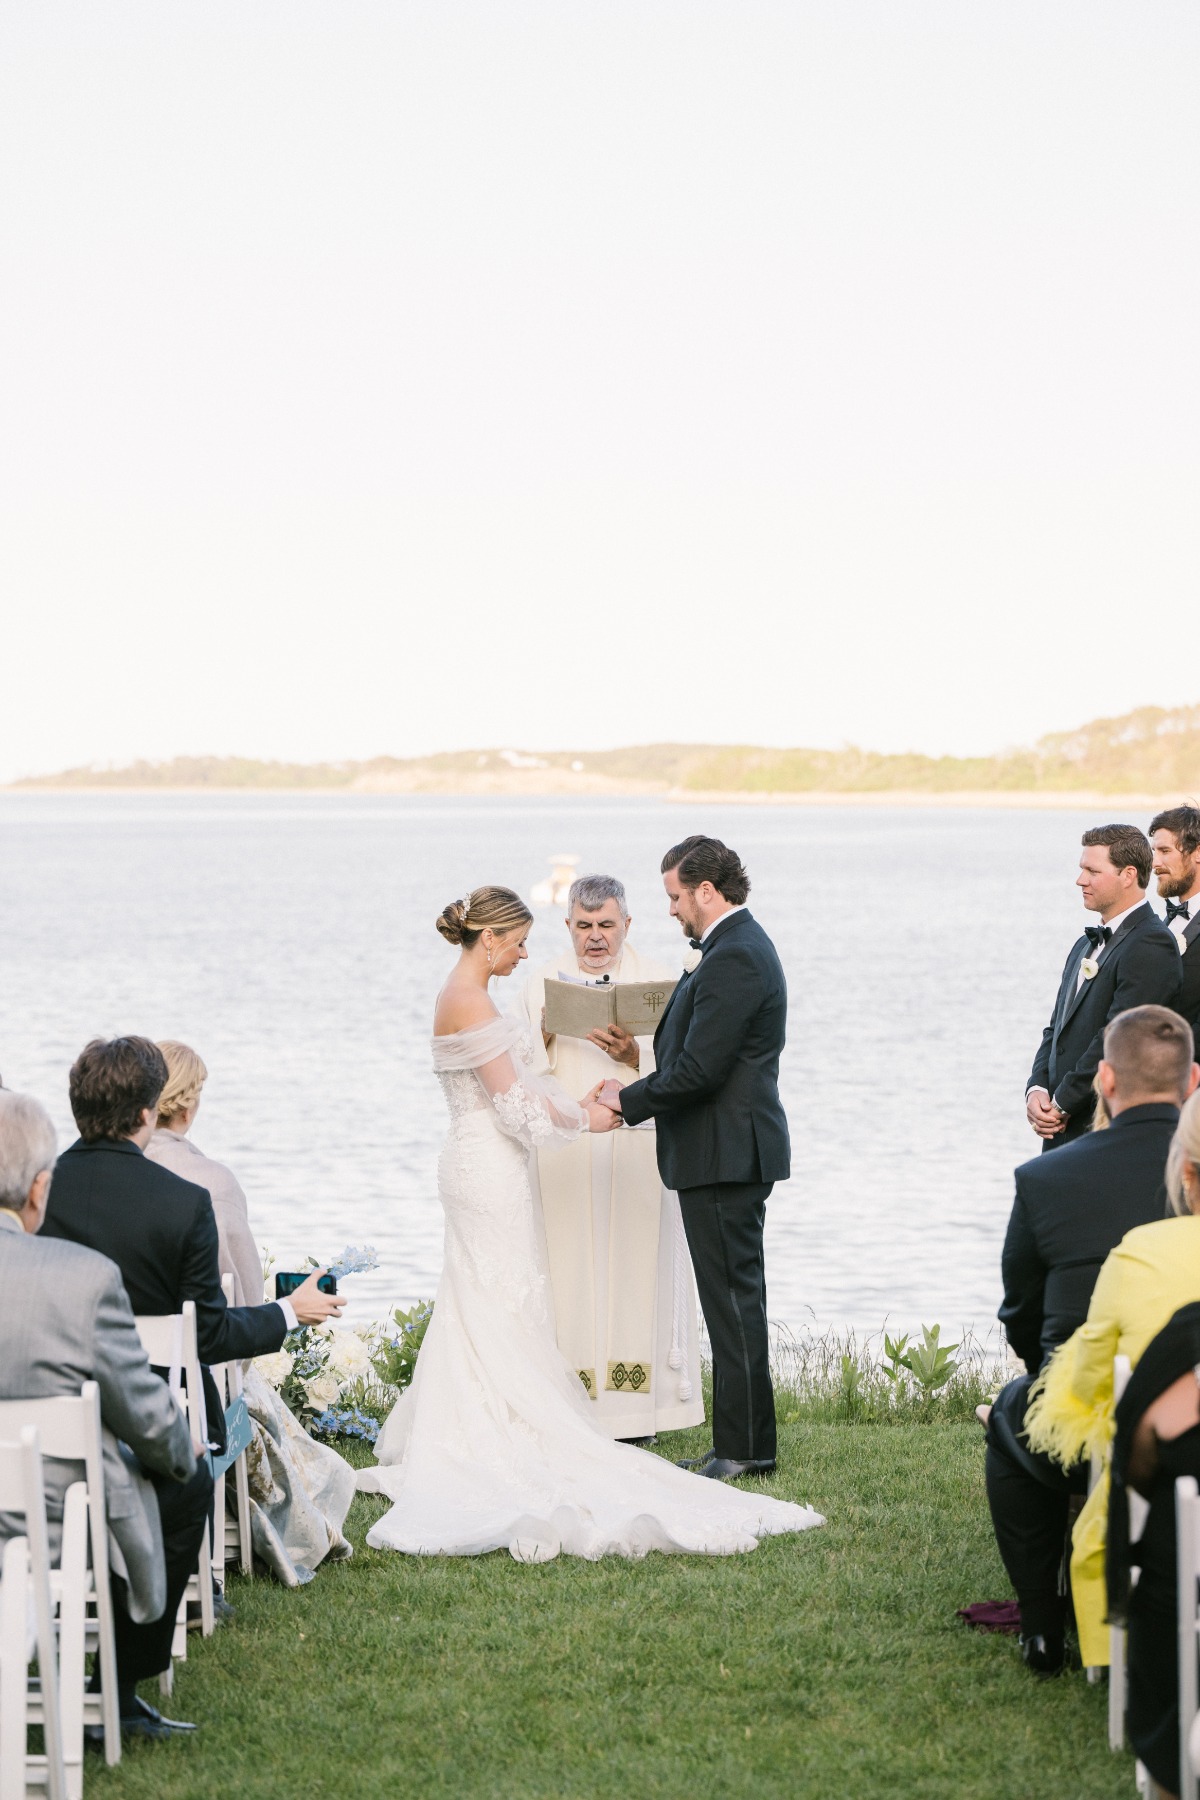 Elegant East Coast seaside wedding ceremony in Cape Cod